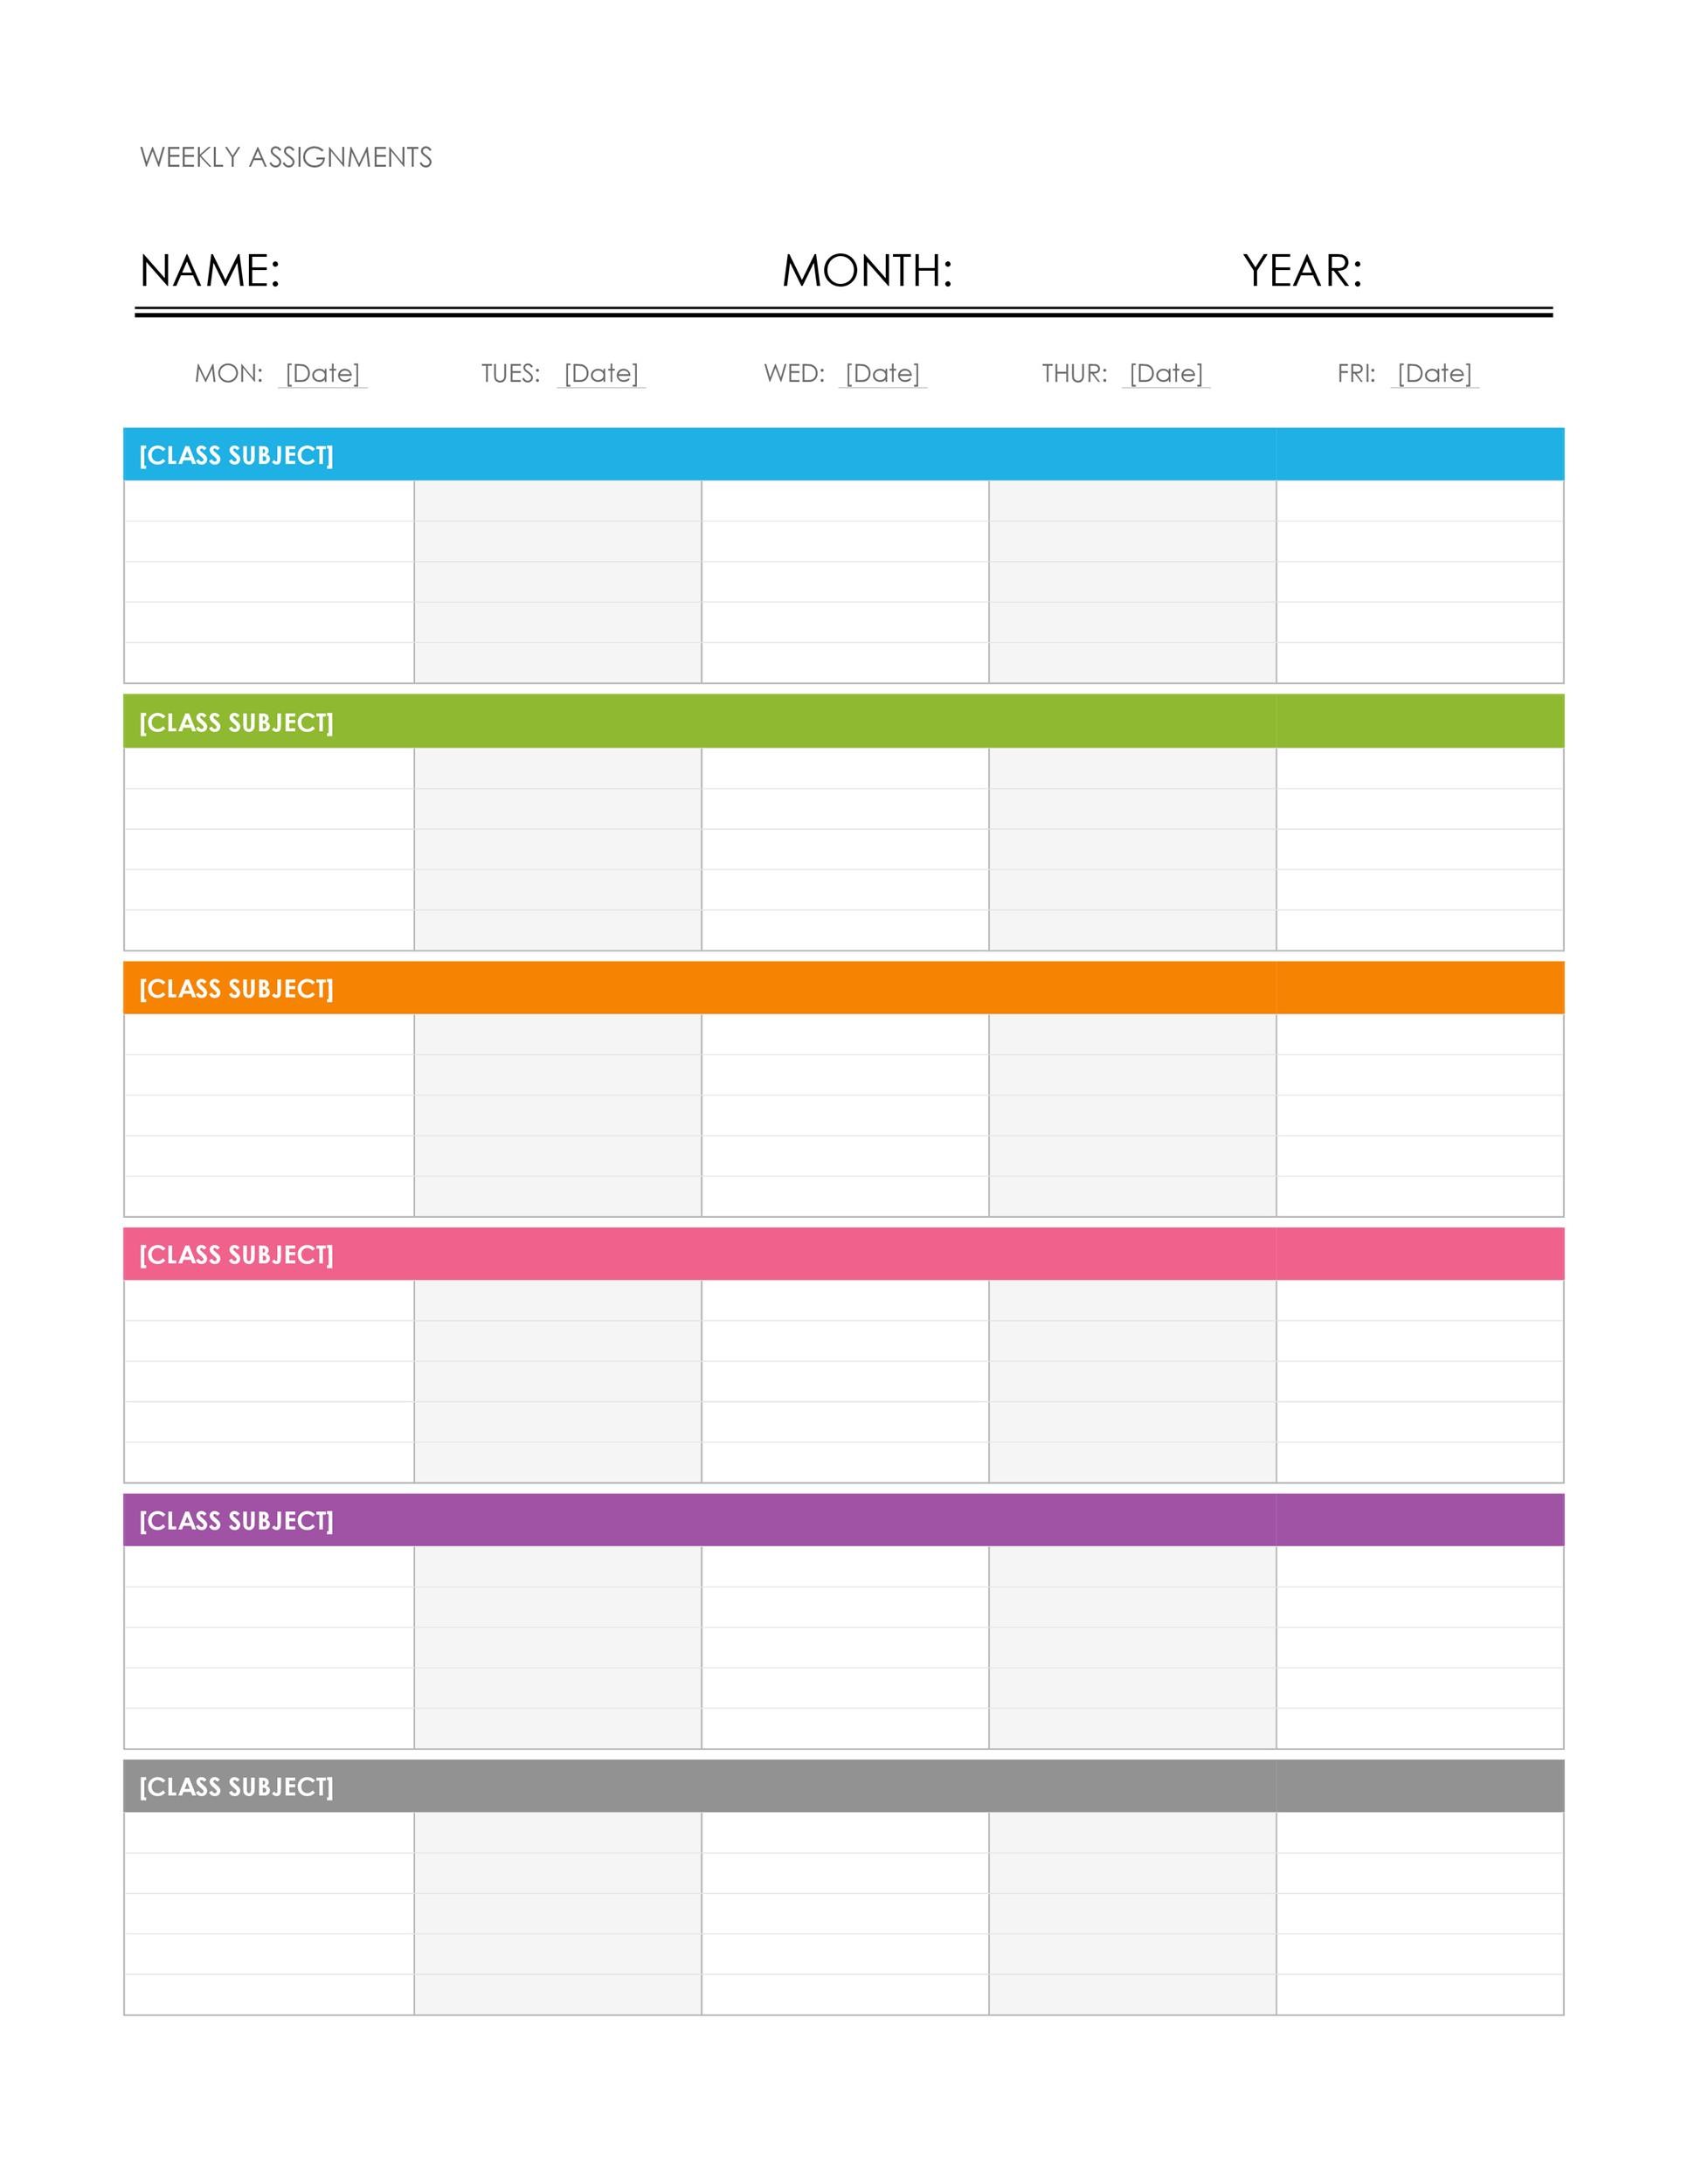 free weekly calendar template for mac